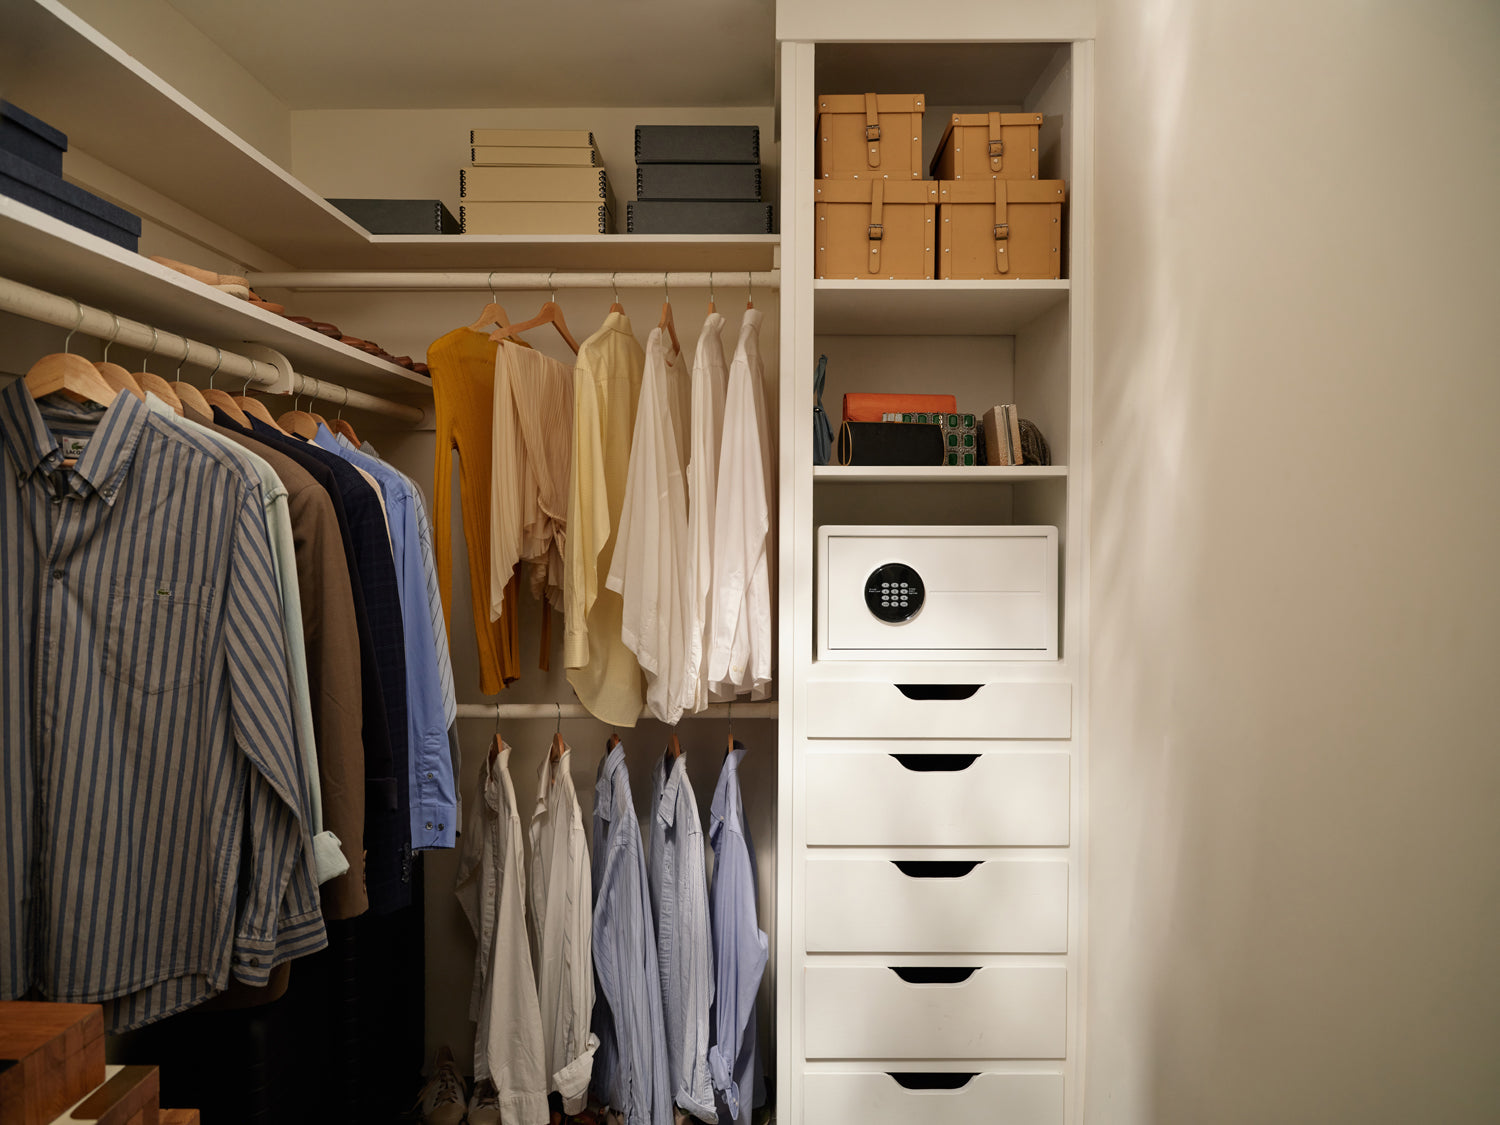 Hidden Closet Safe: 4 Features & Benefits – Mycube Safe